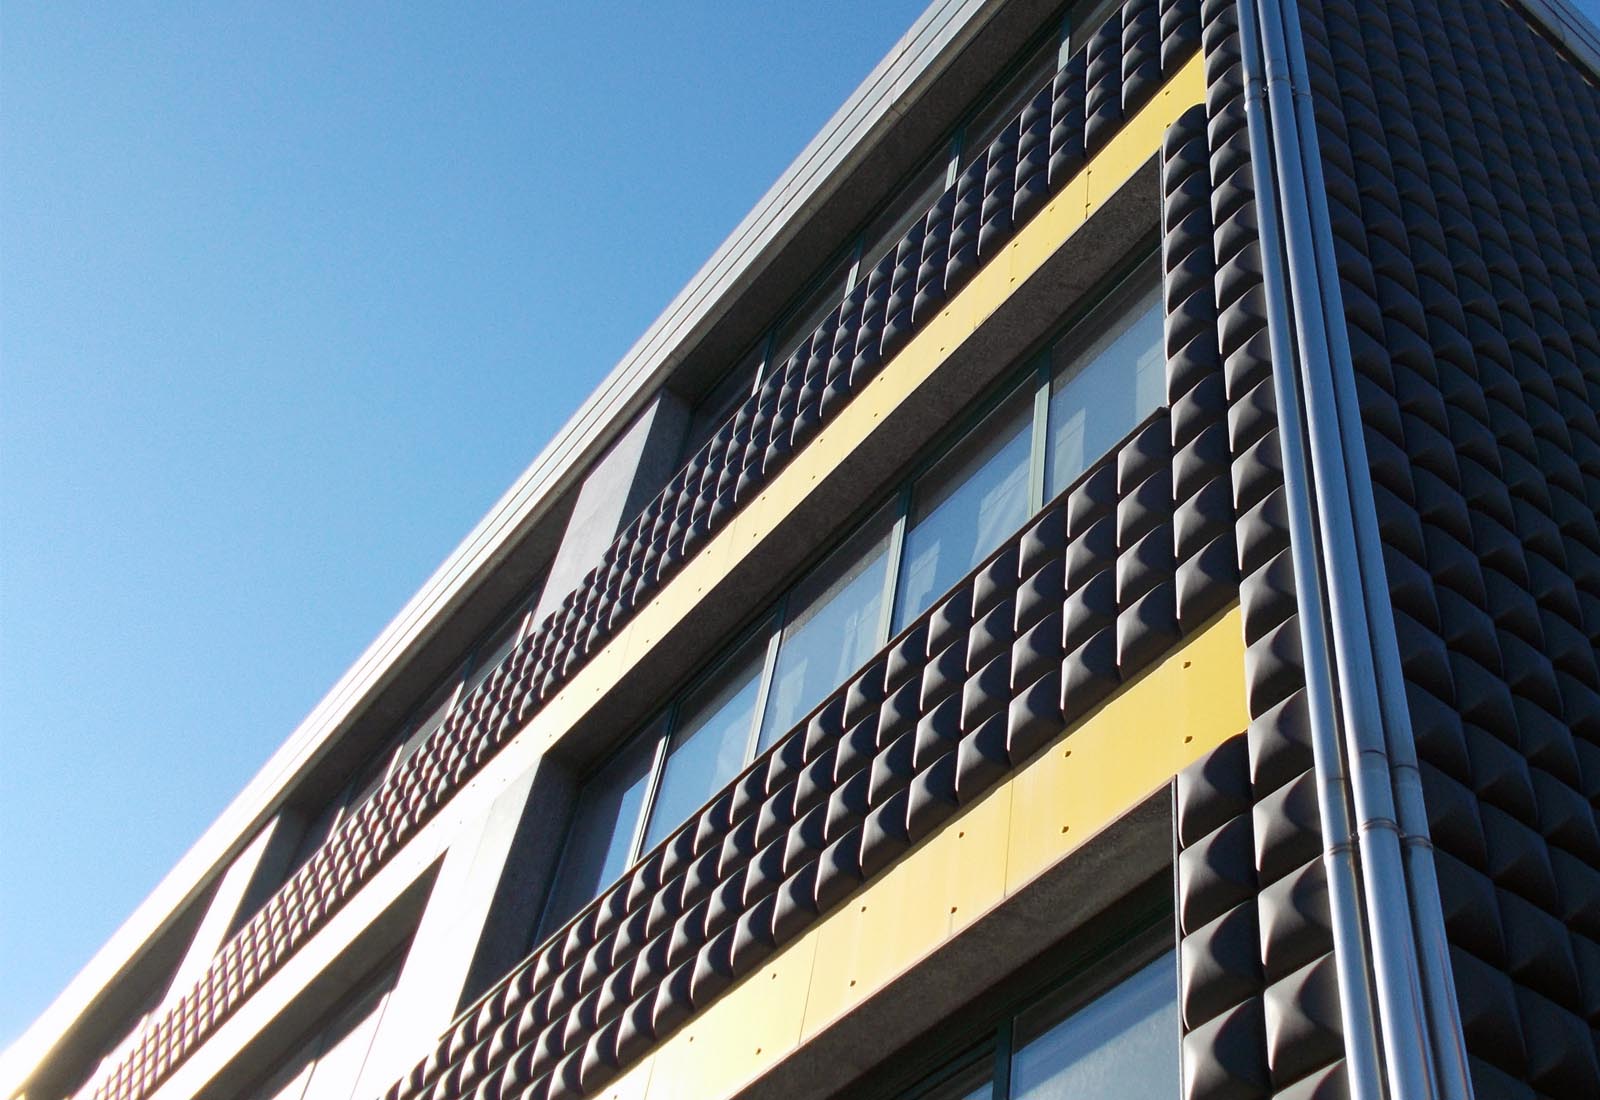 Building 25 Politecnico di Milano - Detail of the east facade